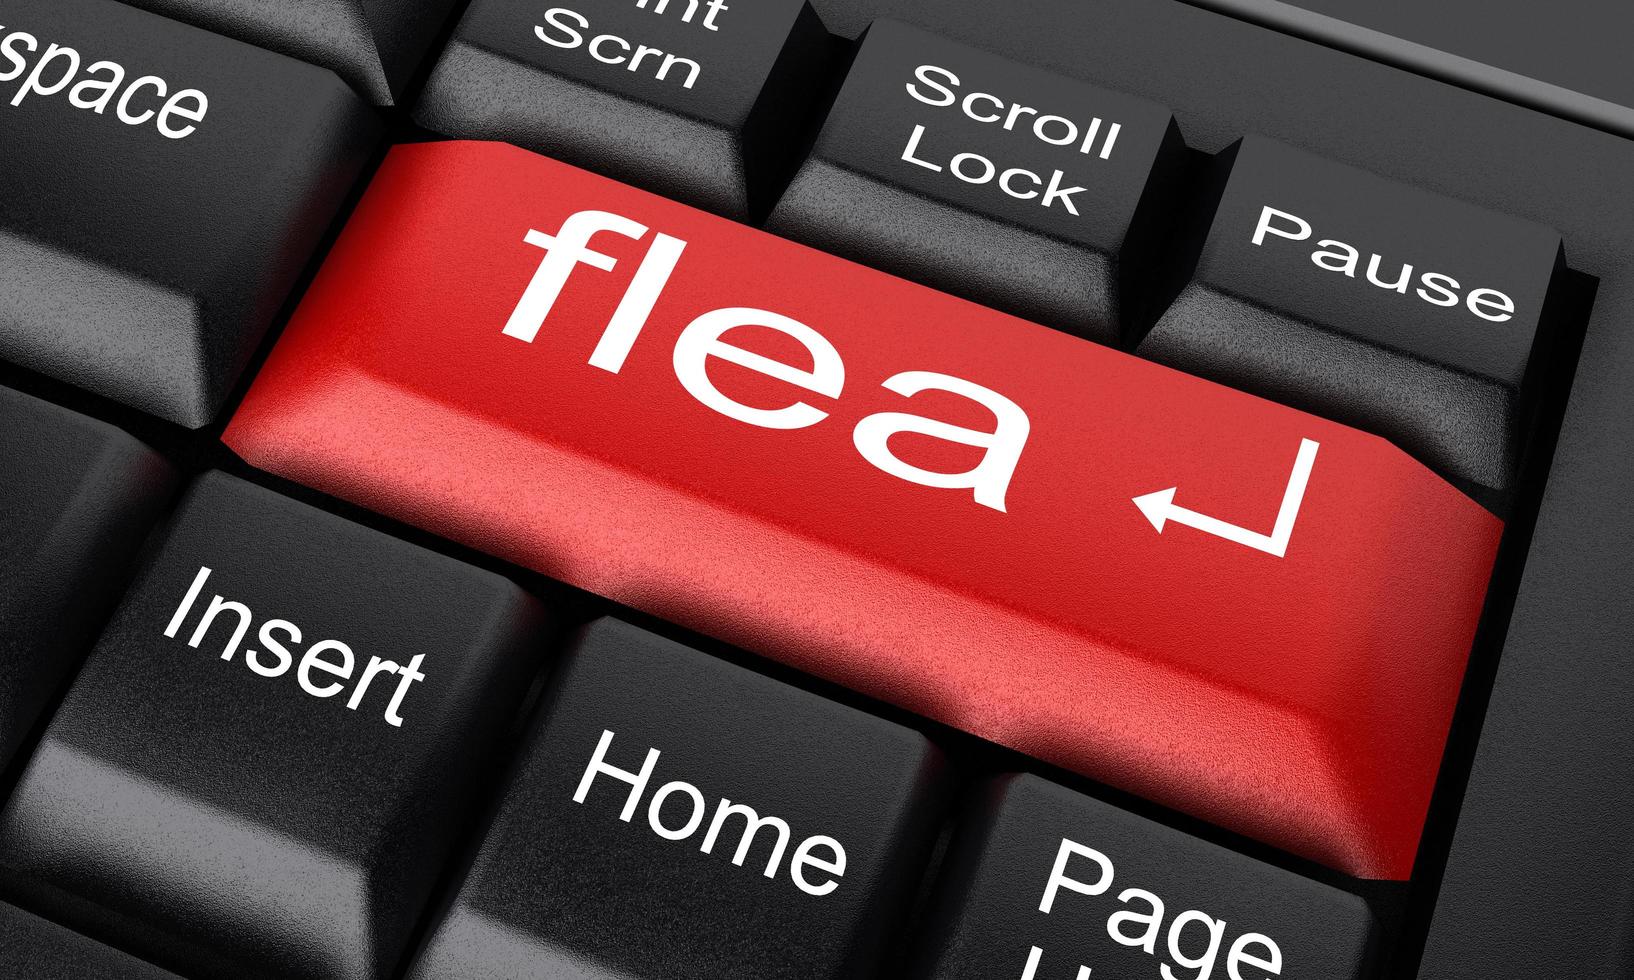 flea word on red keyboard button photo